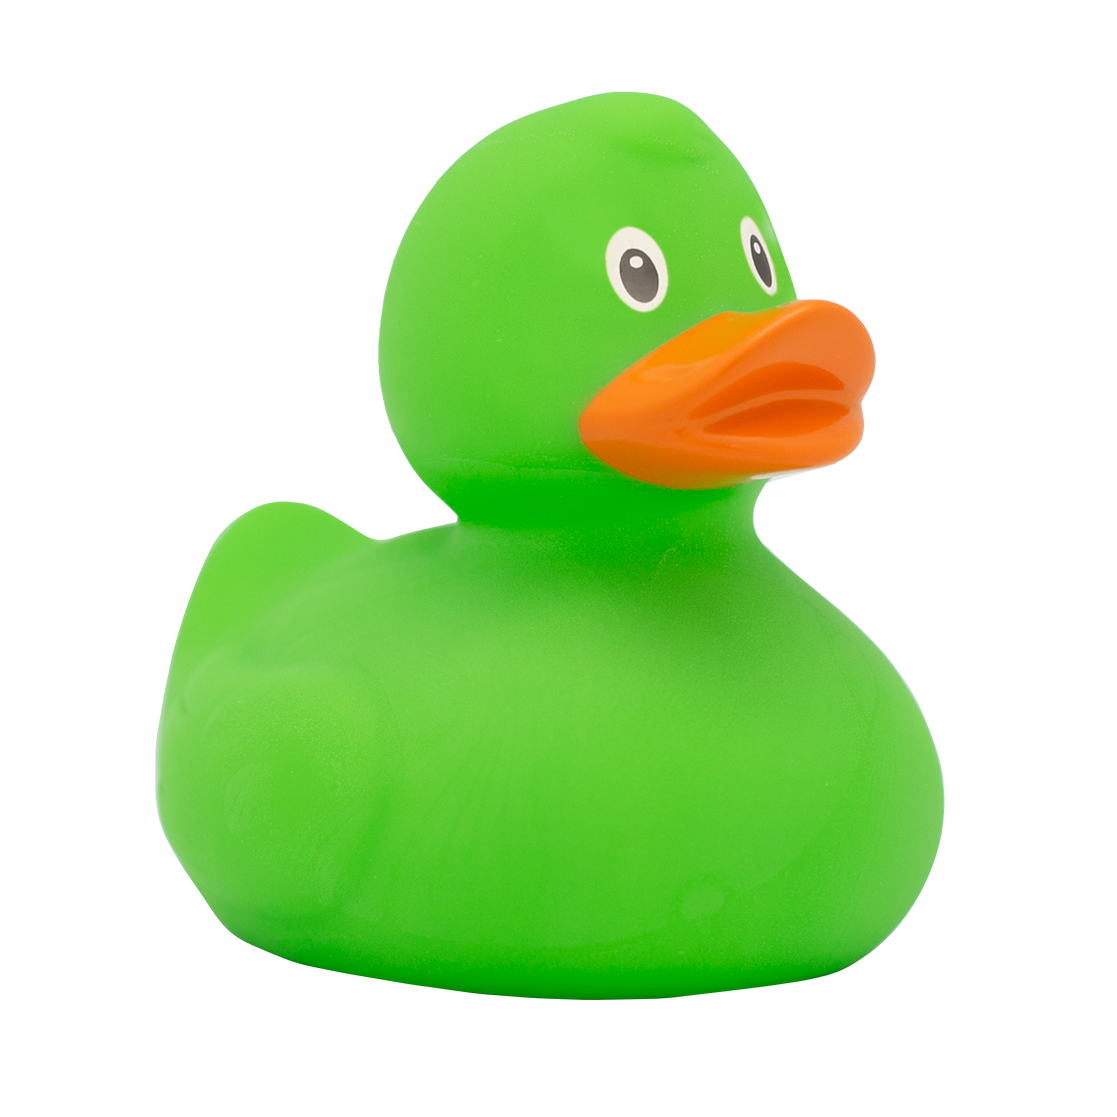 Classic Green Duck.